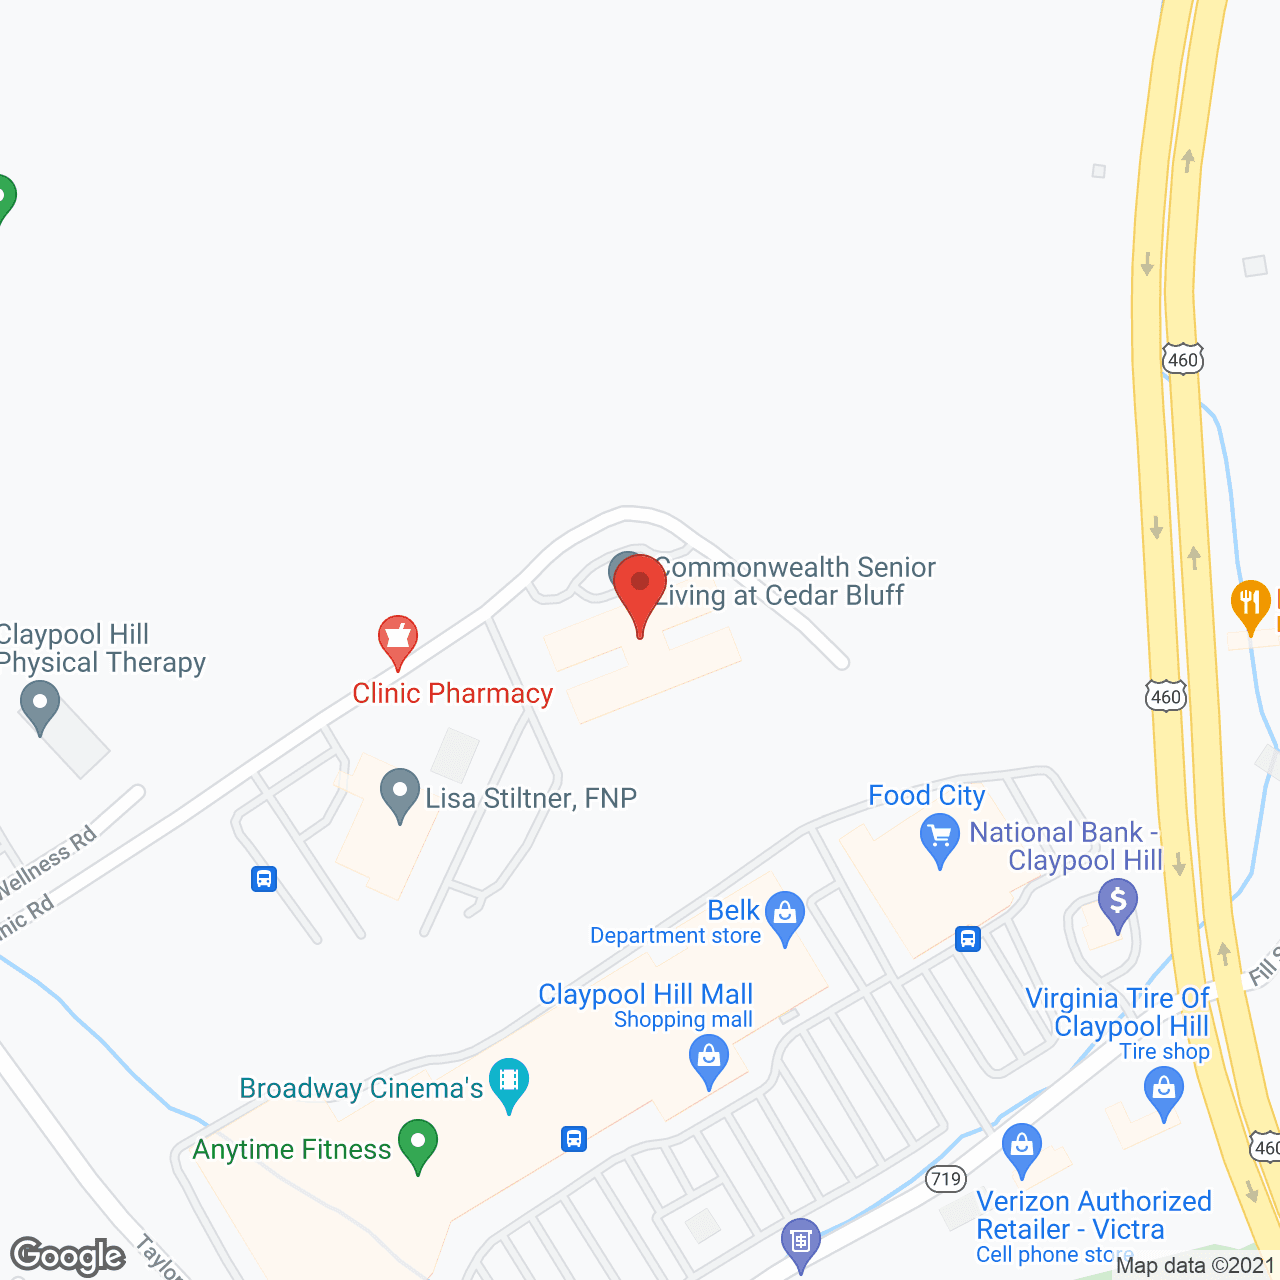 Commonwealth Senior Living at Cedar Bluff in google map